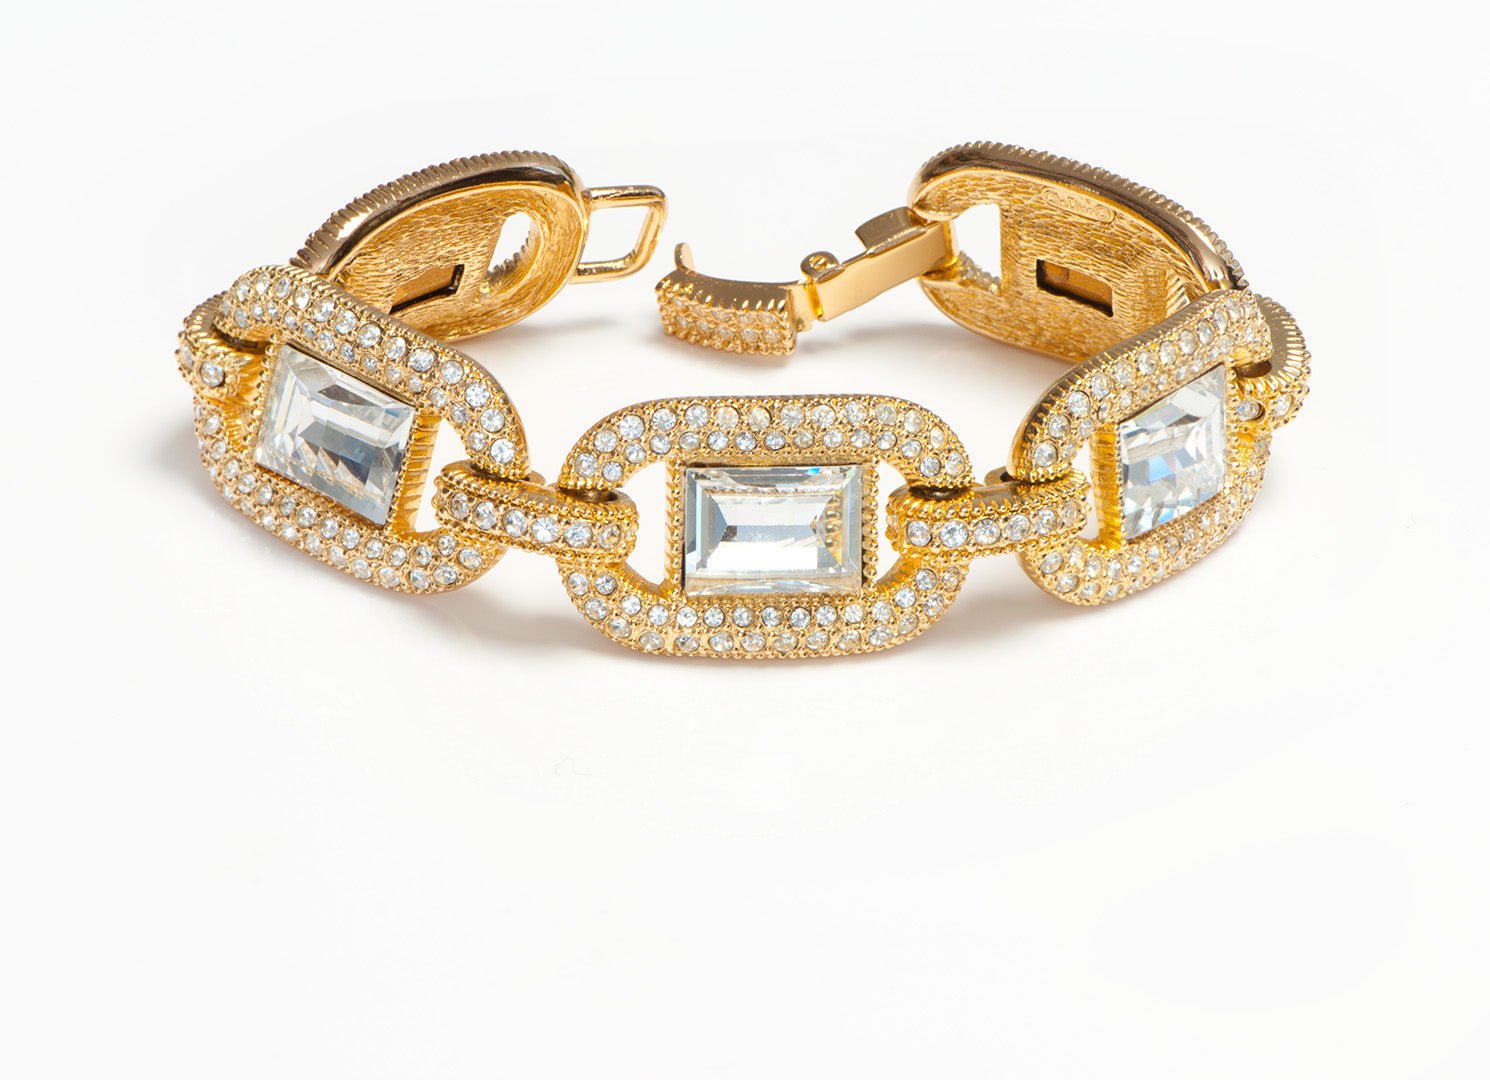 Vintage Christian Dior Gold Plated Pave Crystal Chain Bracelet